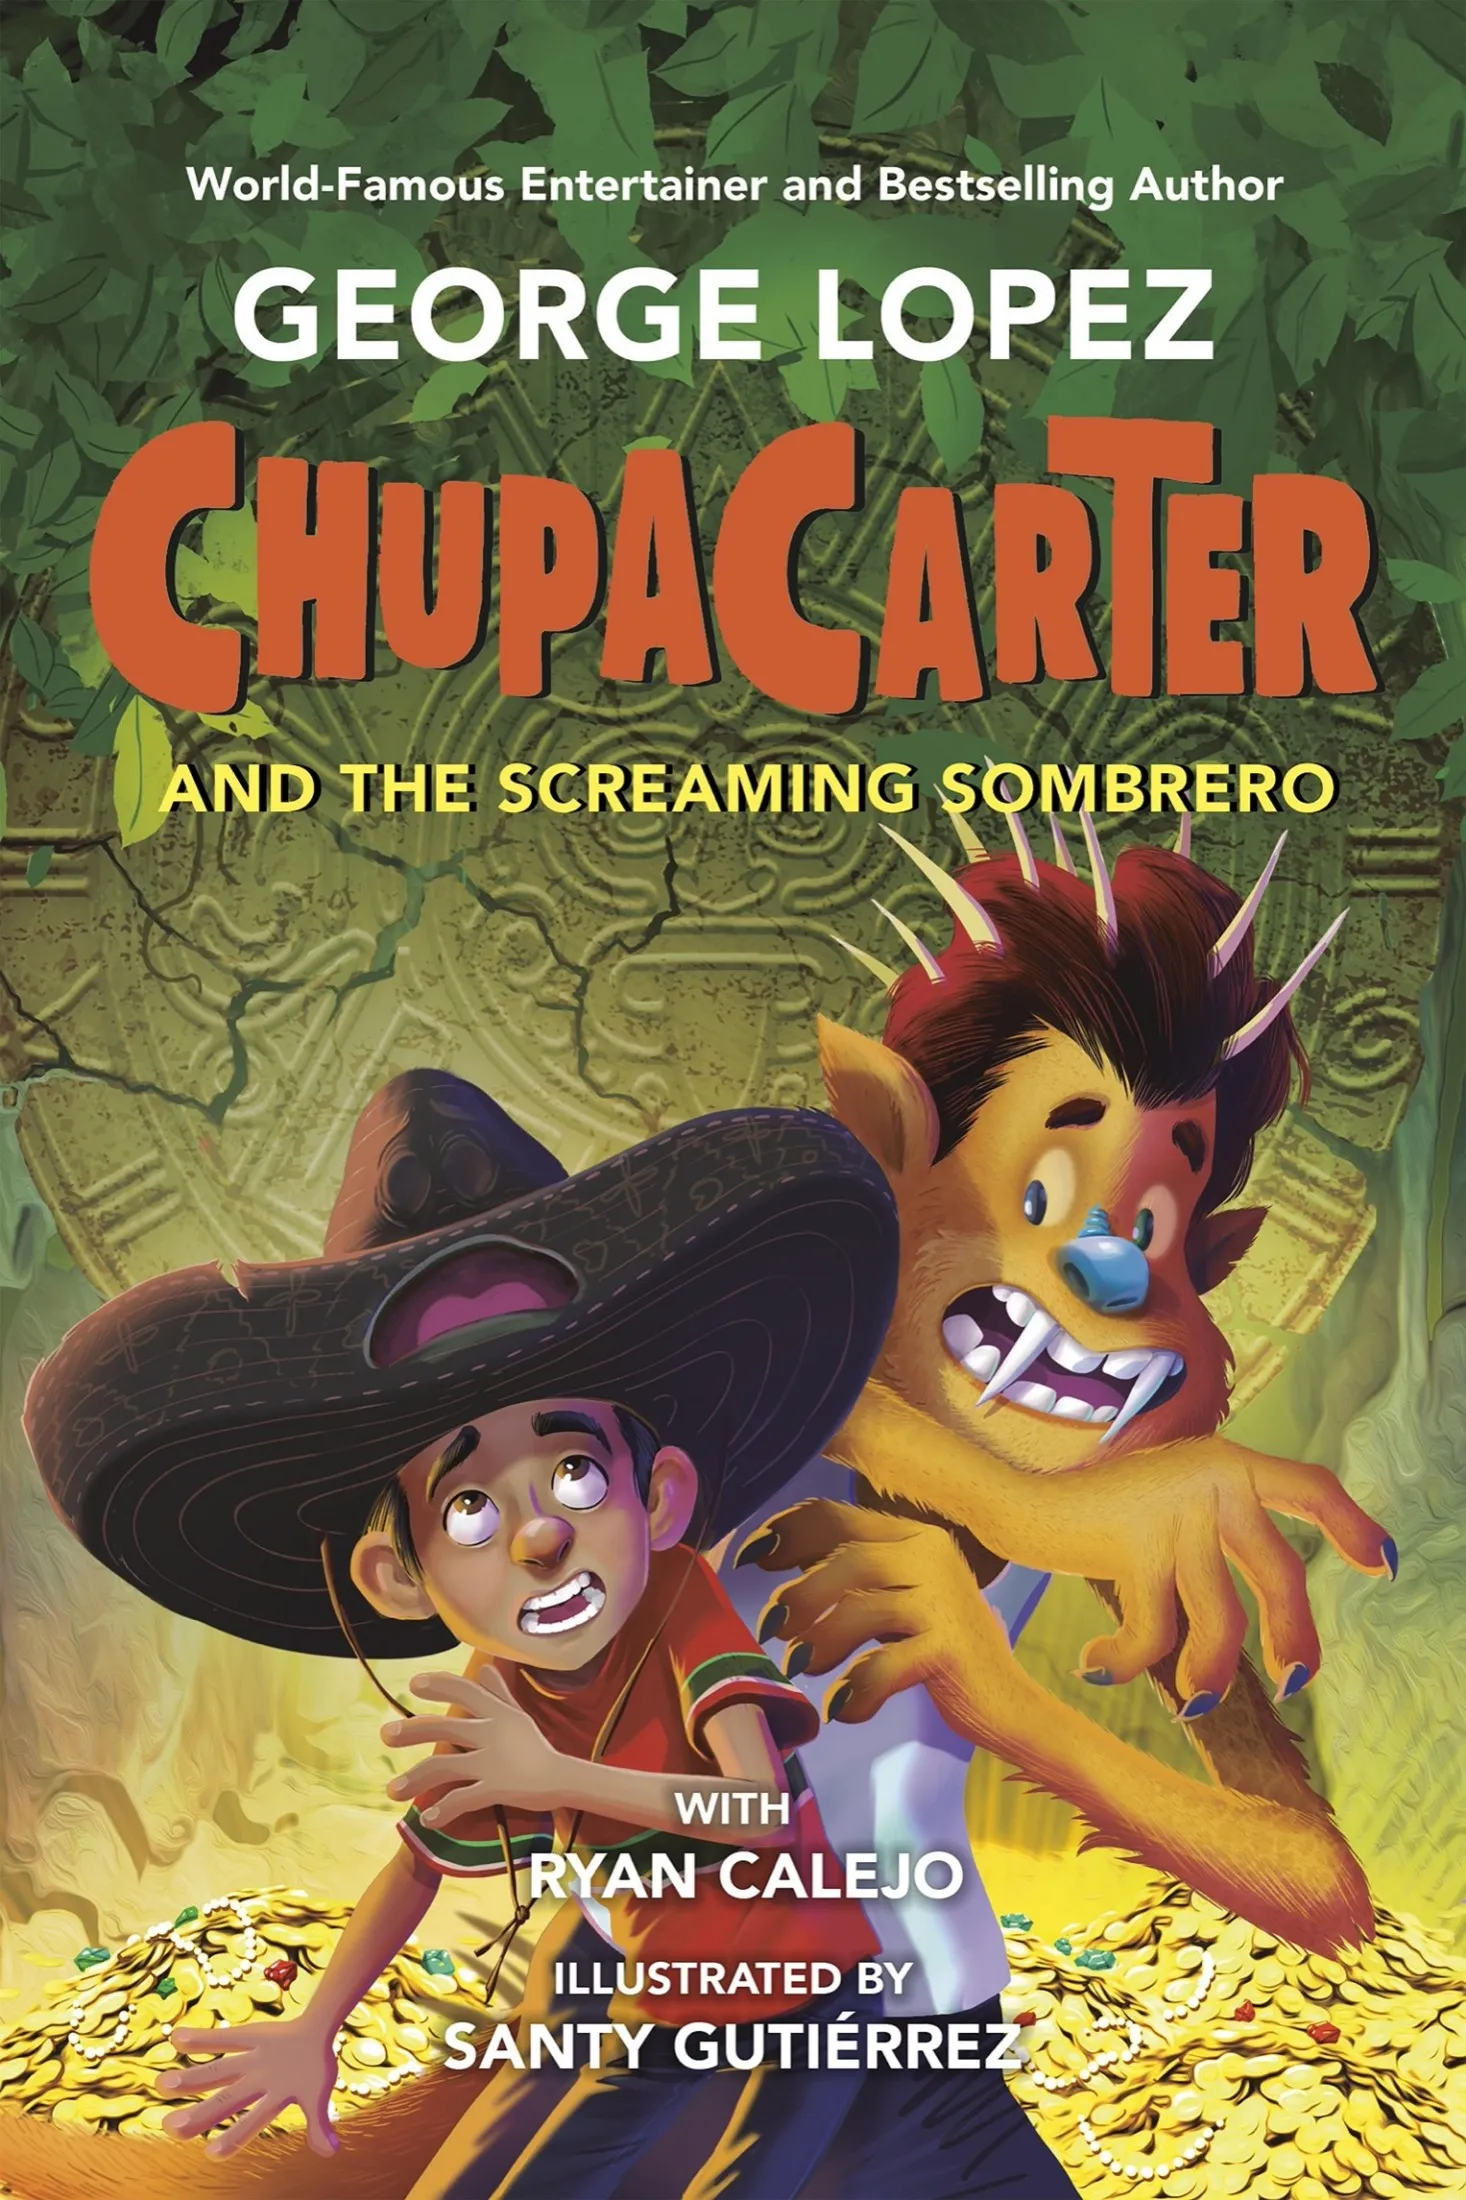 ChupaCarter and the Screaming Sombrero (ChupaCarter #3)